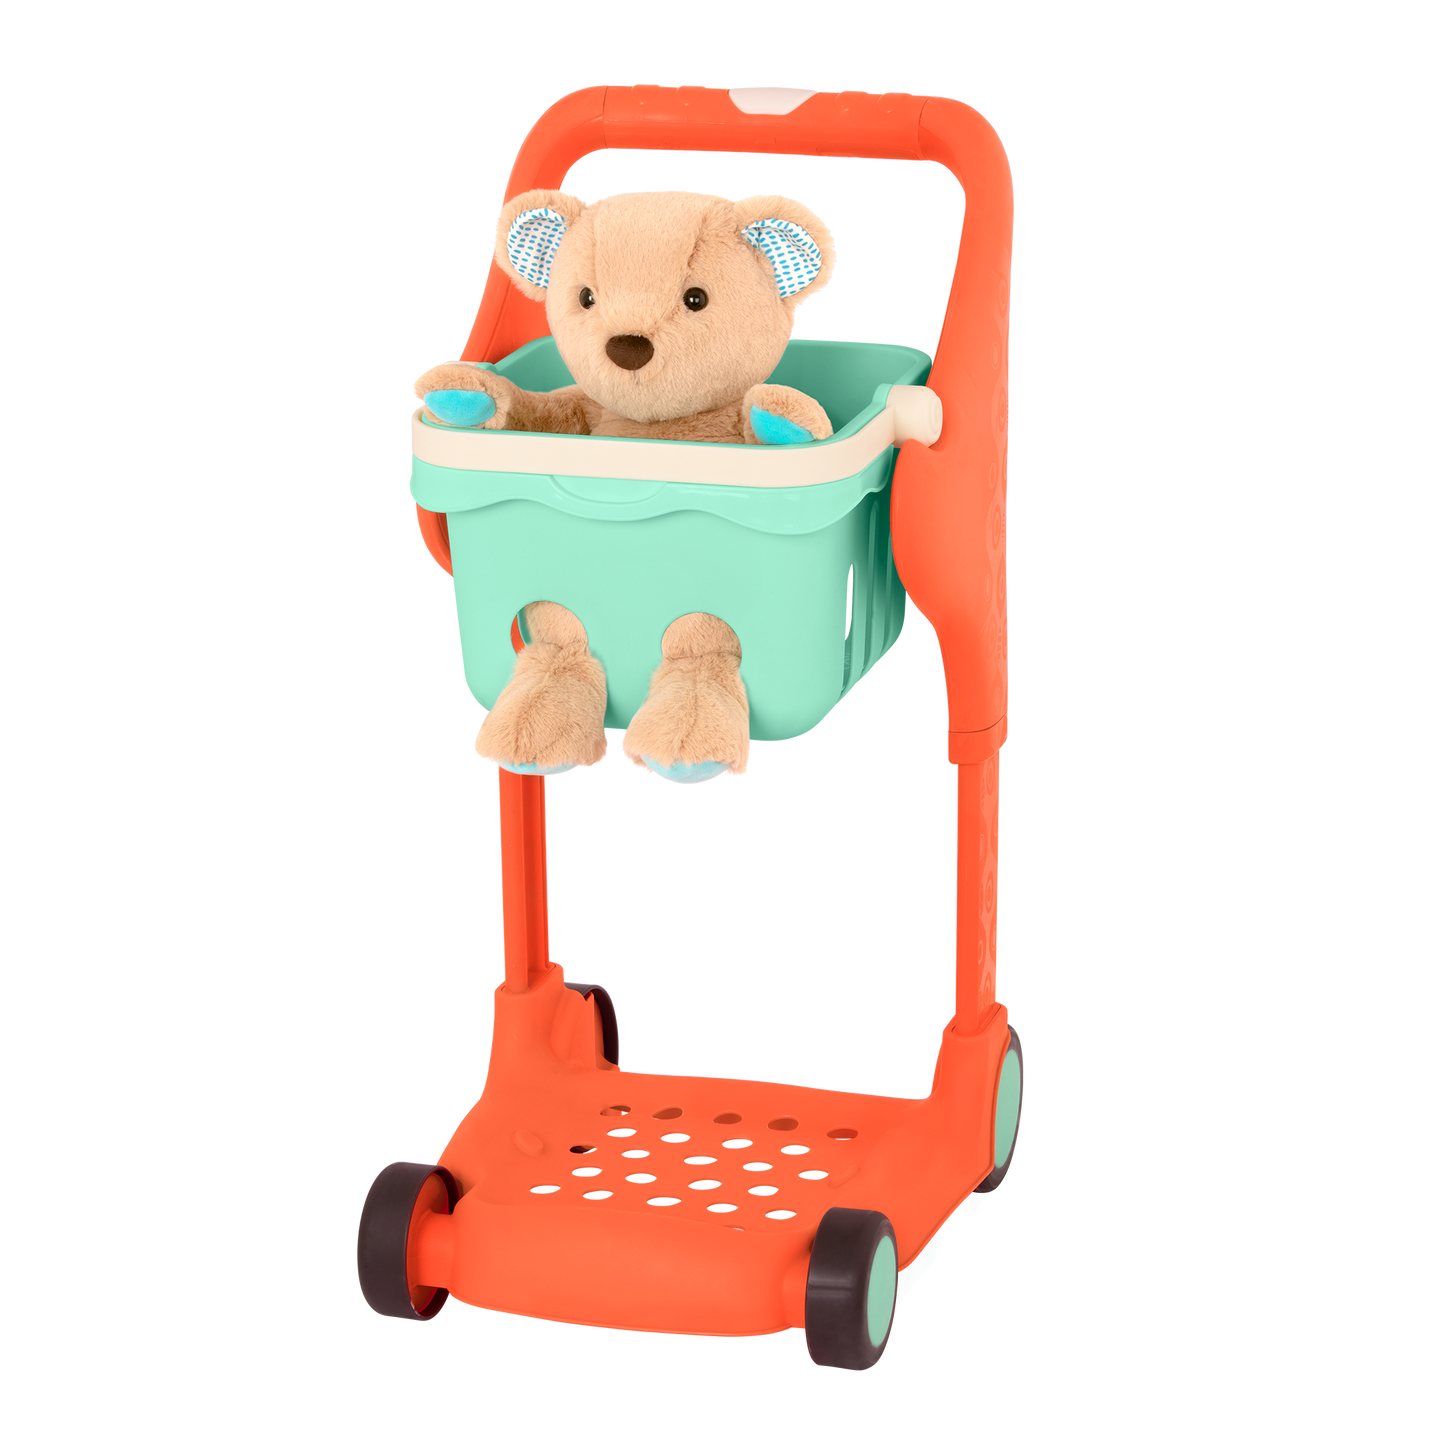 B. Toys - Musical Shopping Cart (6676240924706)